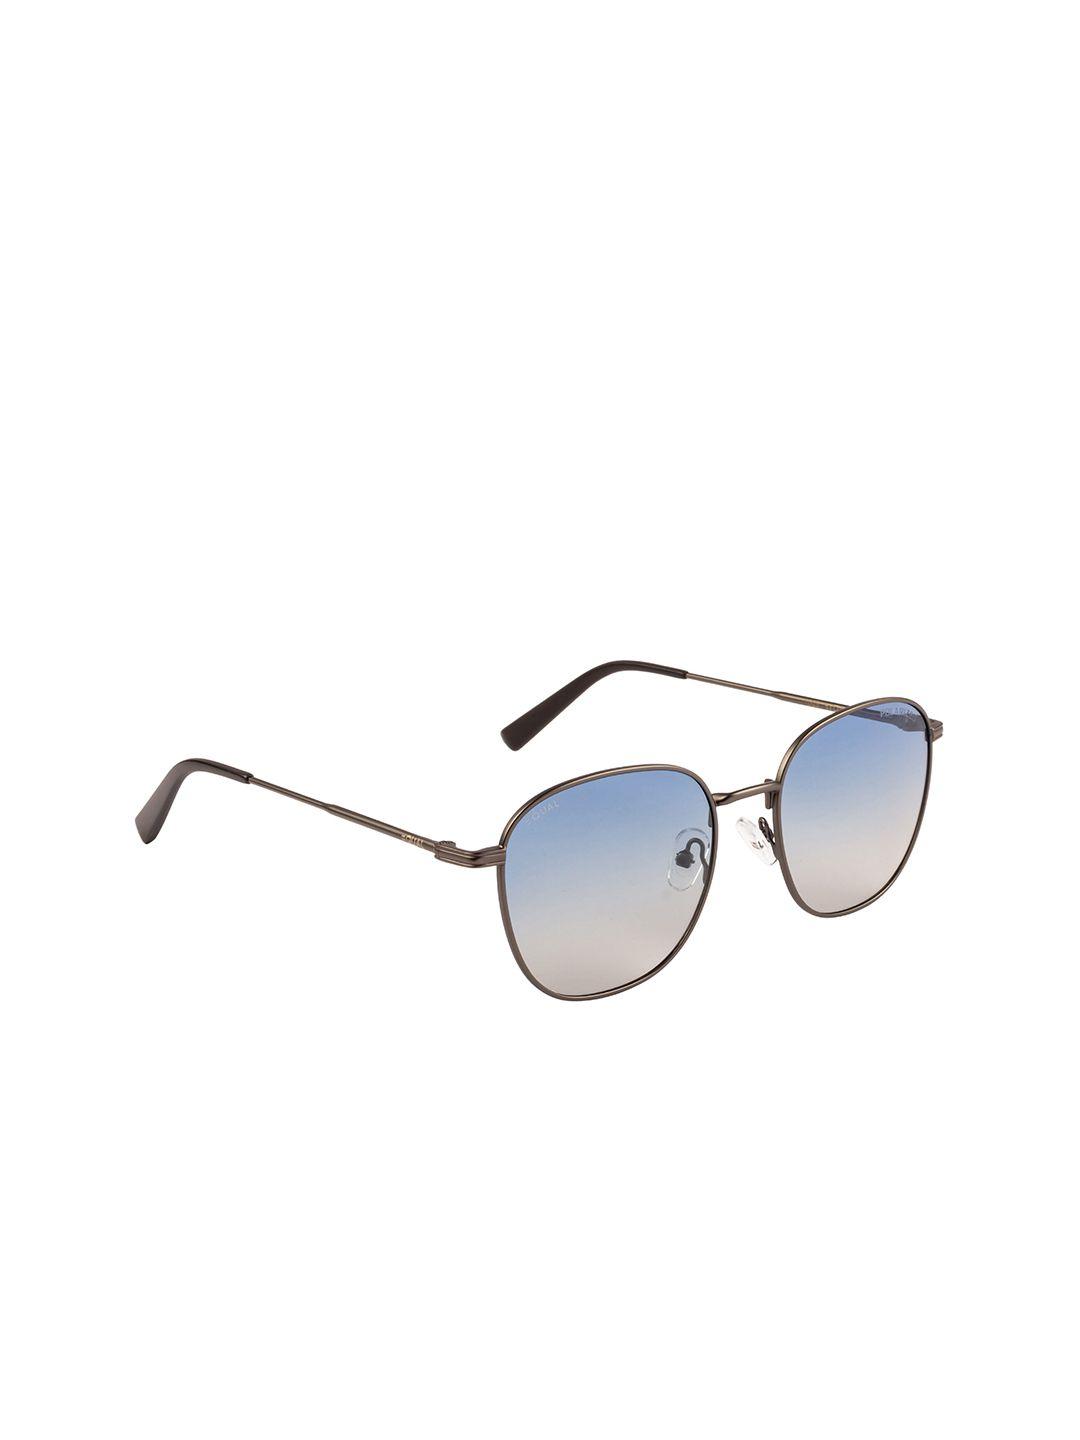 equal unisex blue lens & black aviator sunglasses with uv protected lens-7003 53019-140 c3